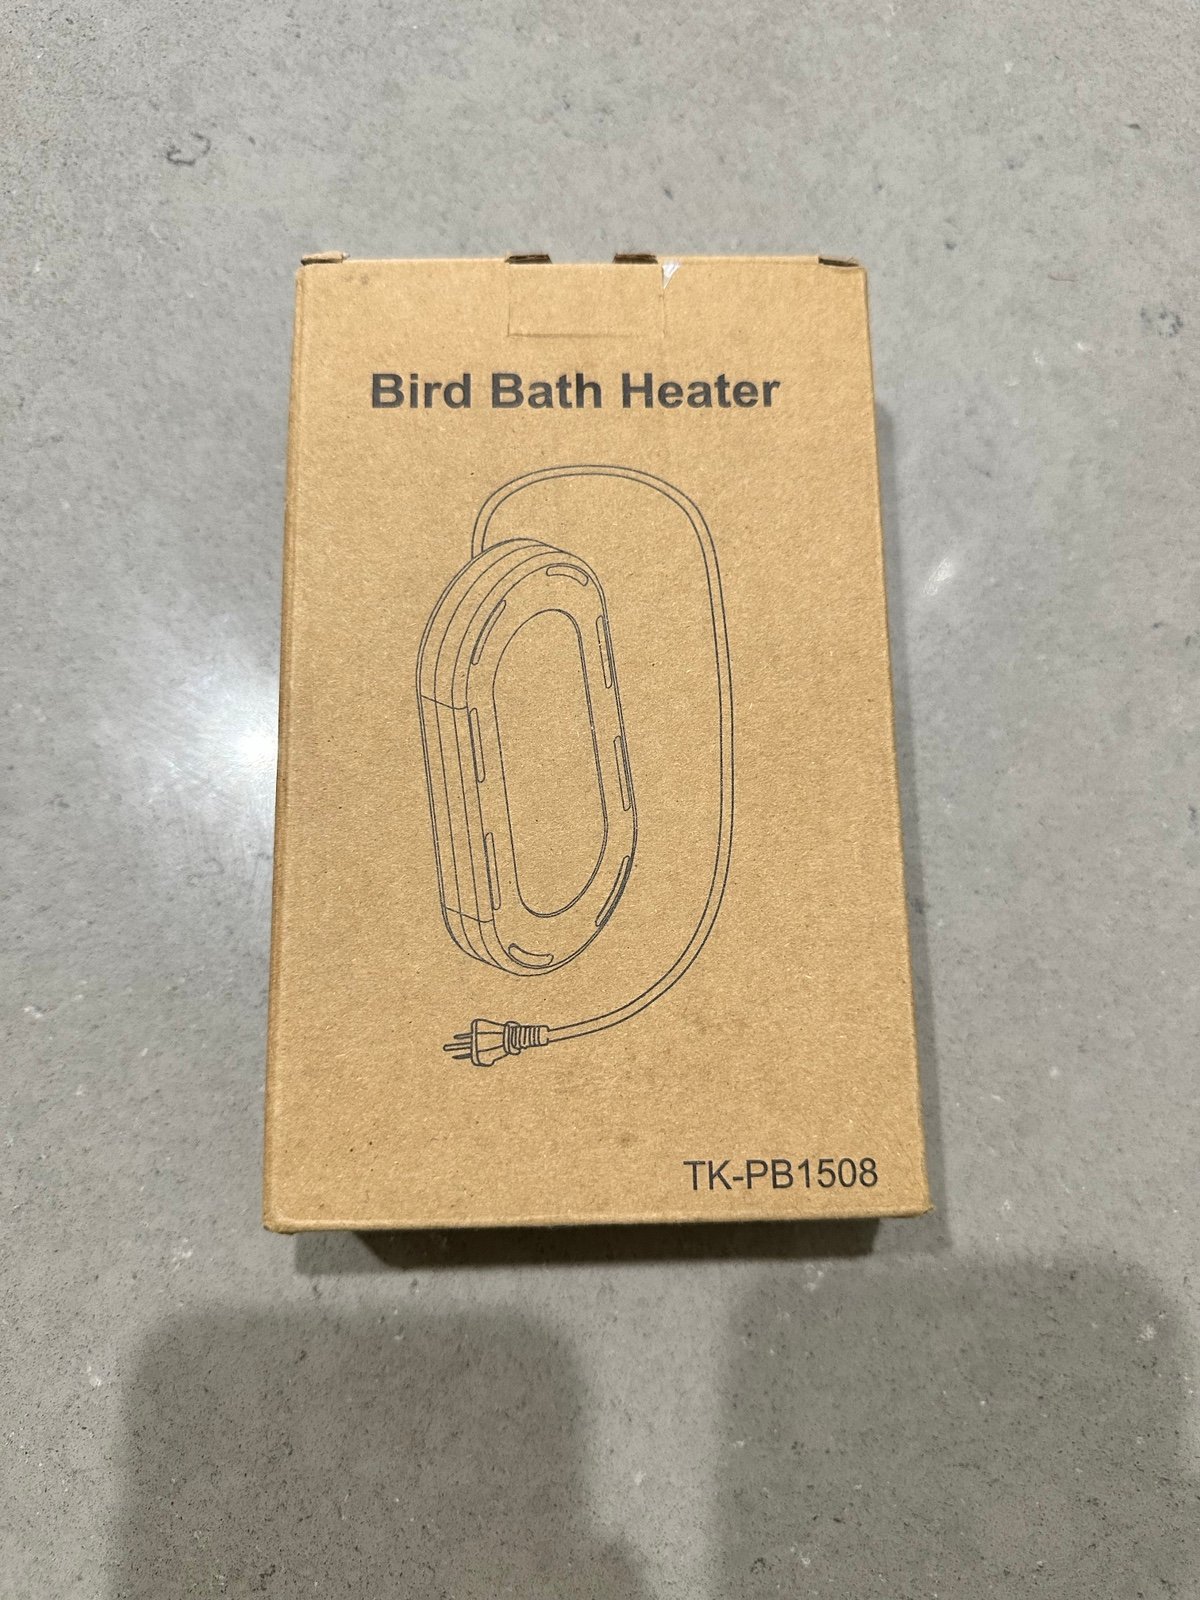 Bird bath heater cqZd7kOMd